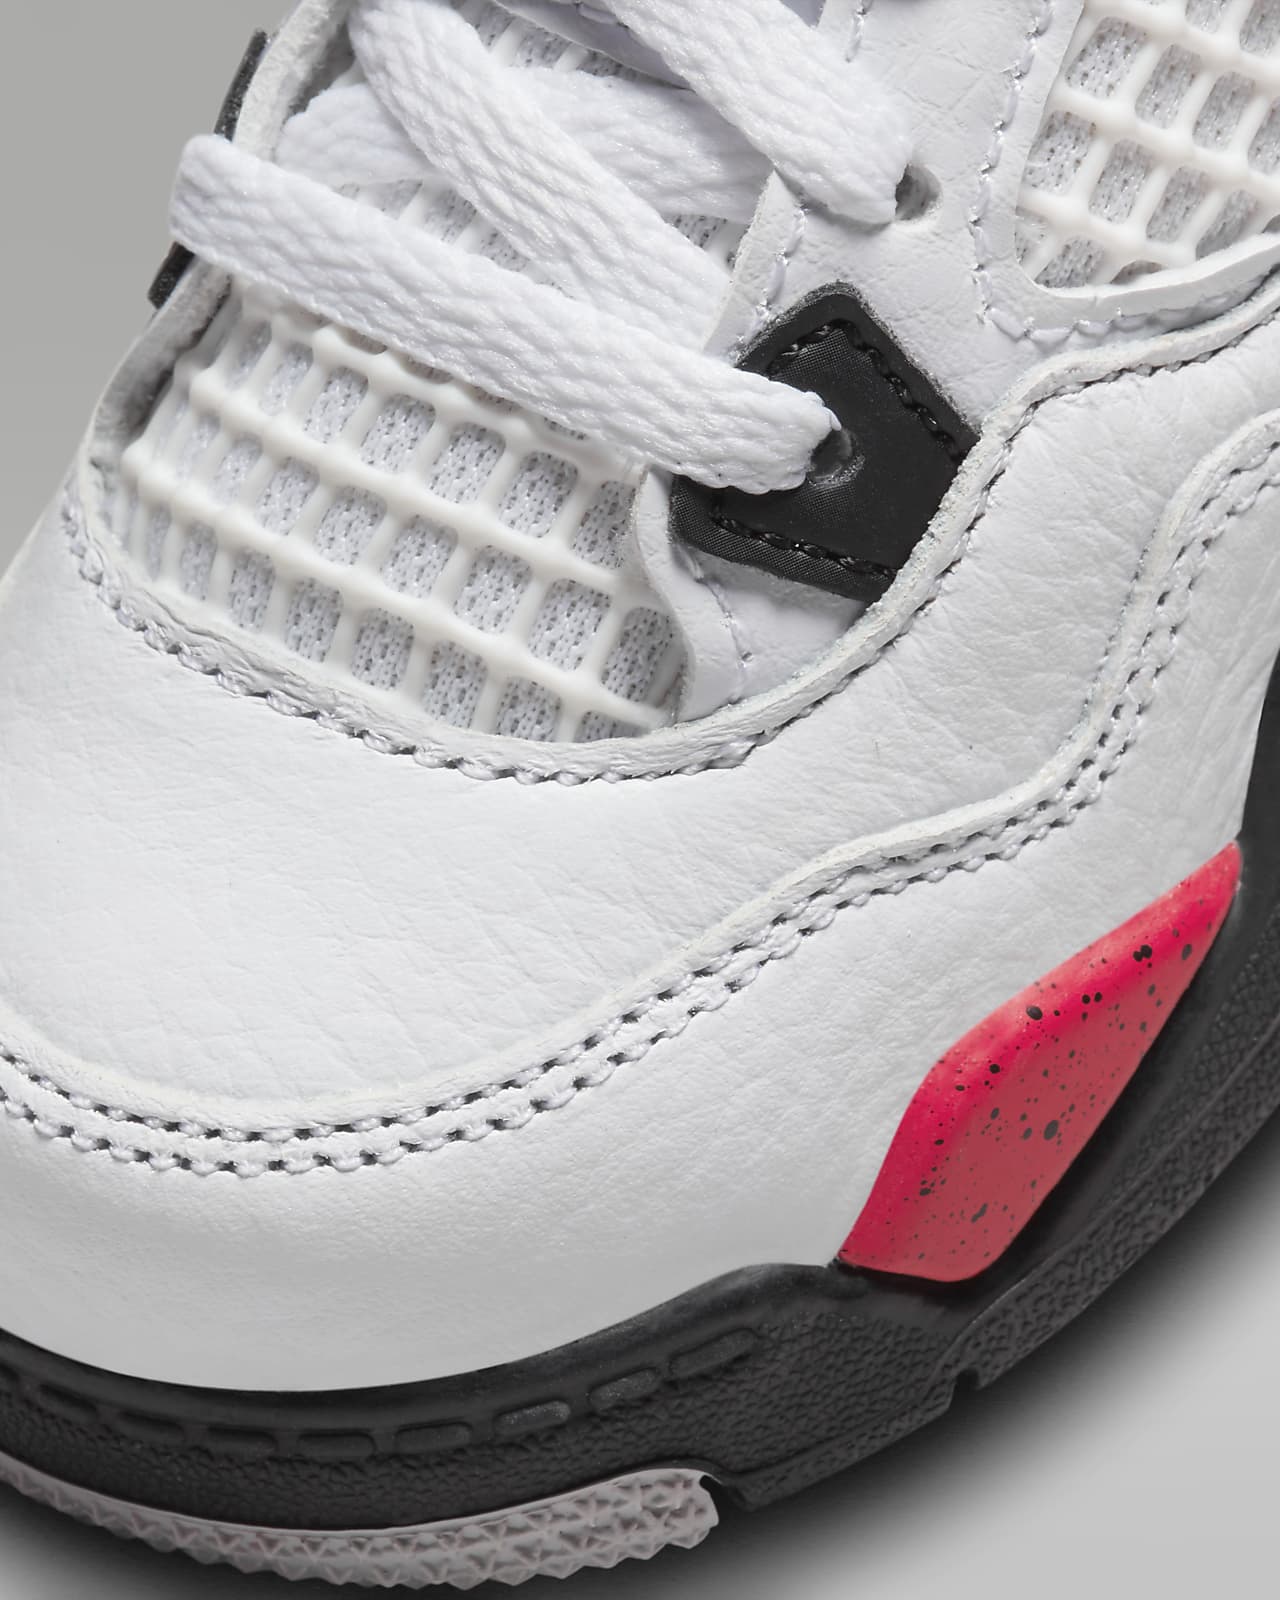 Air Jordan 4 Retro Men's Shoes